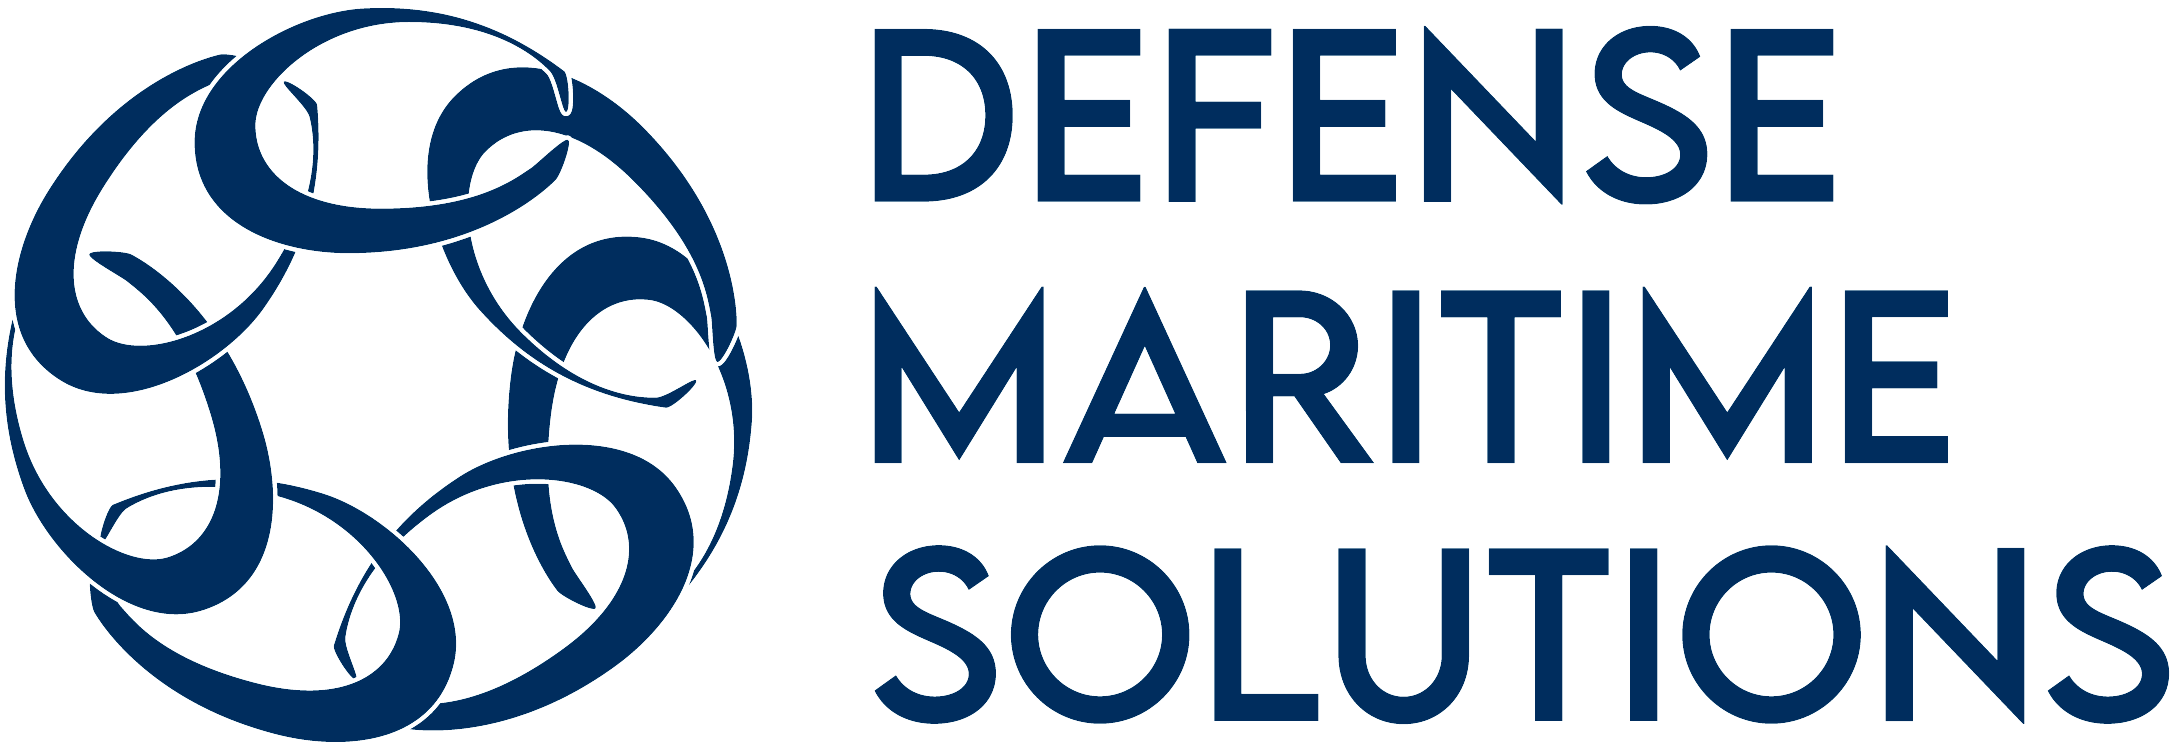 Defense Maritime Solutions